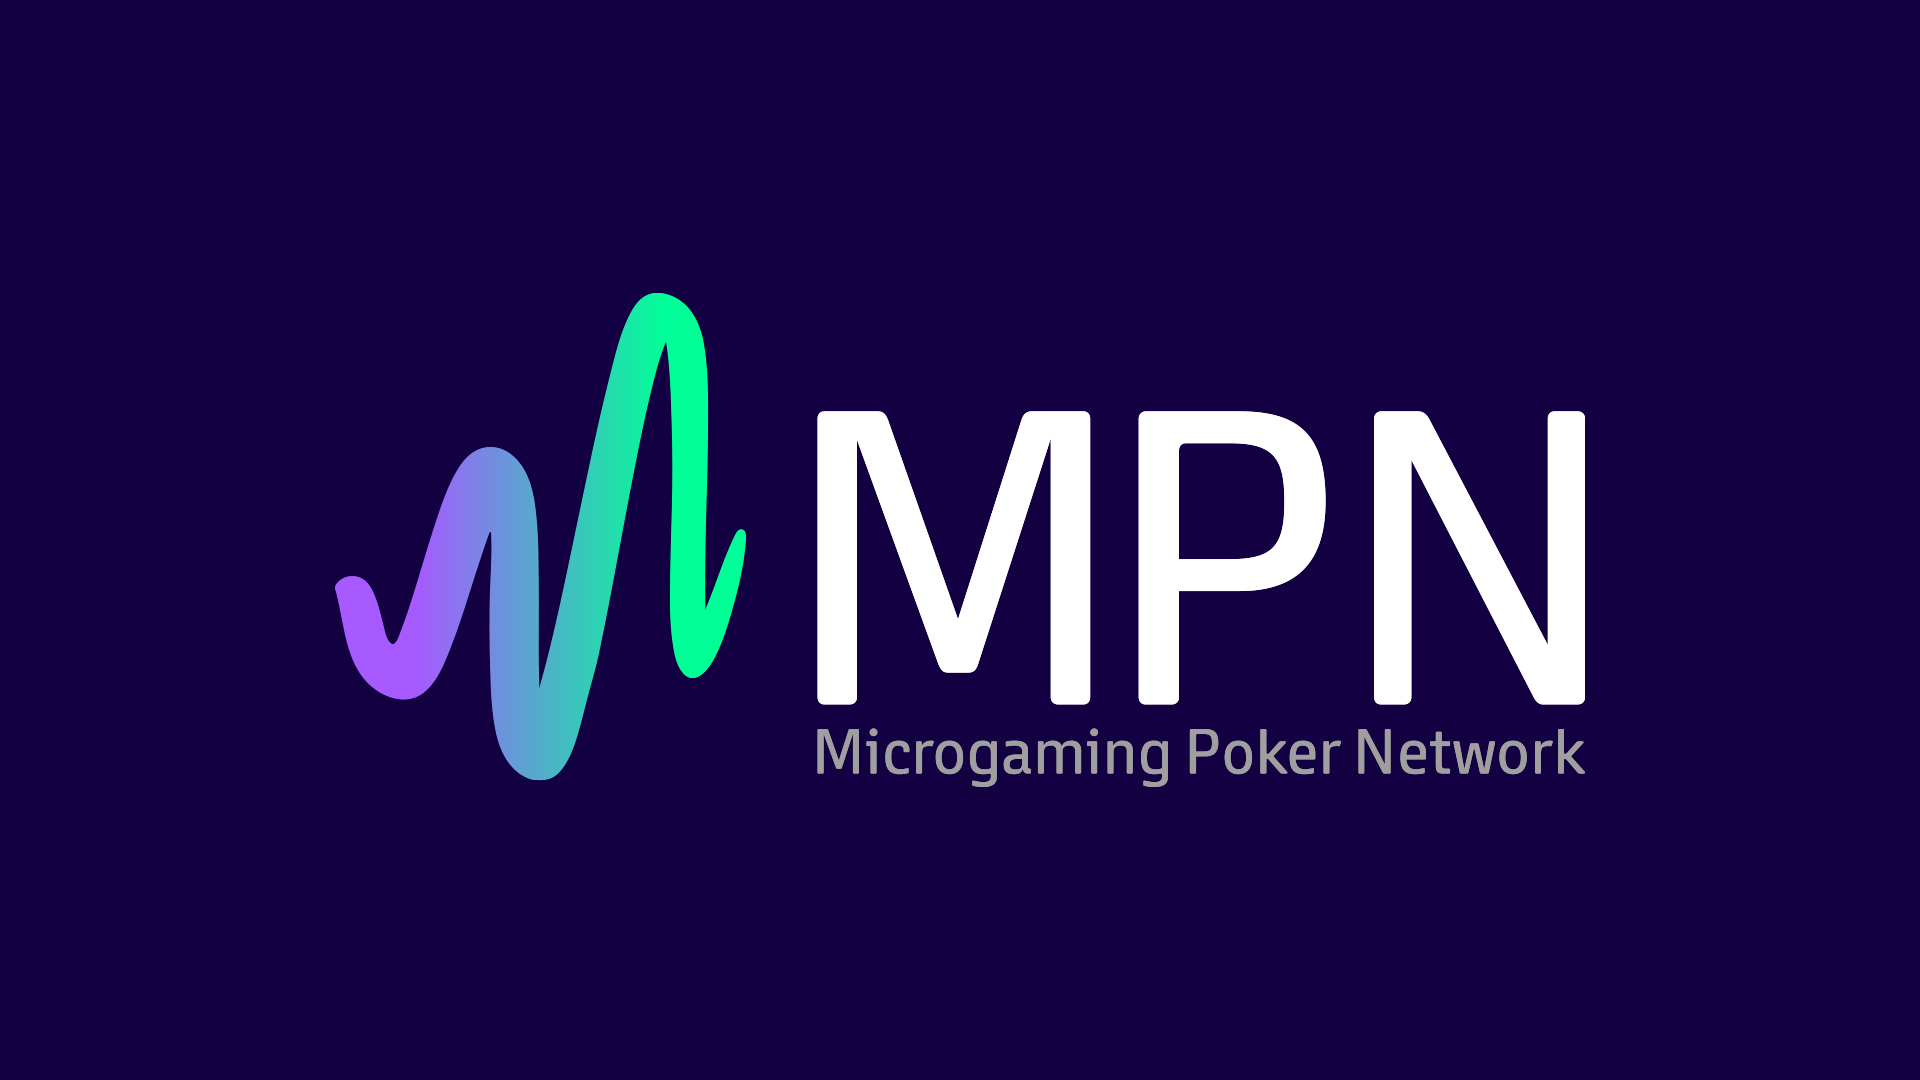 Microgaming Poker Network (MPN). 